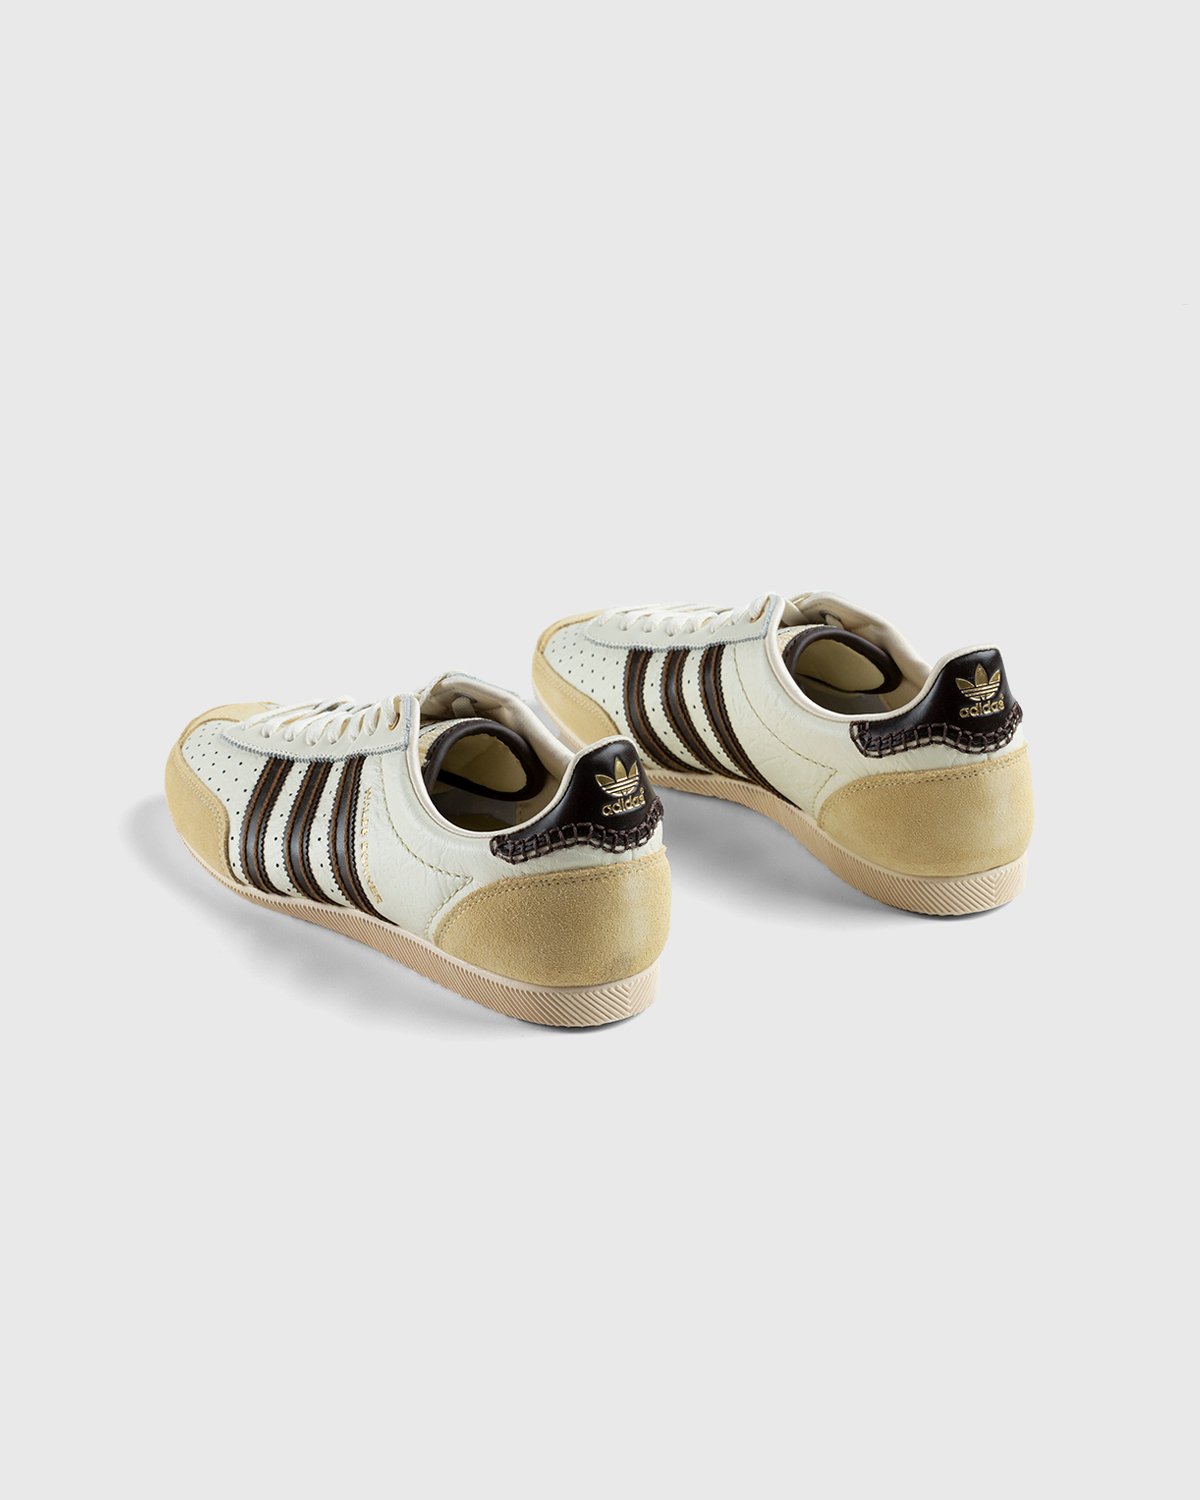 Adidas x Wales Bonner - Japan Cream White/Easy Yellow/Dark Brown - Footwear - White - Image 4